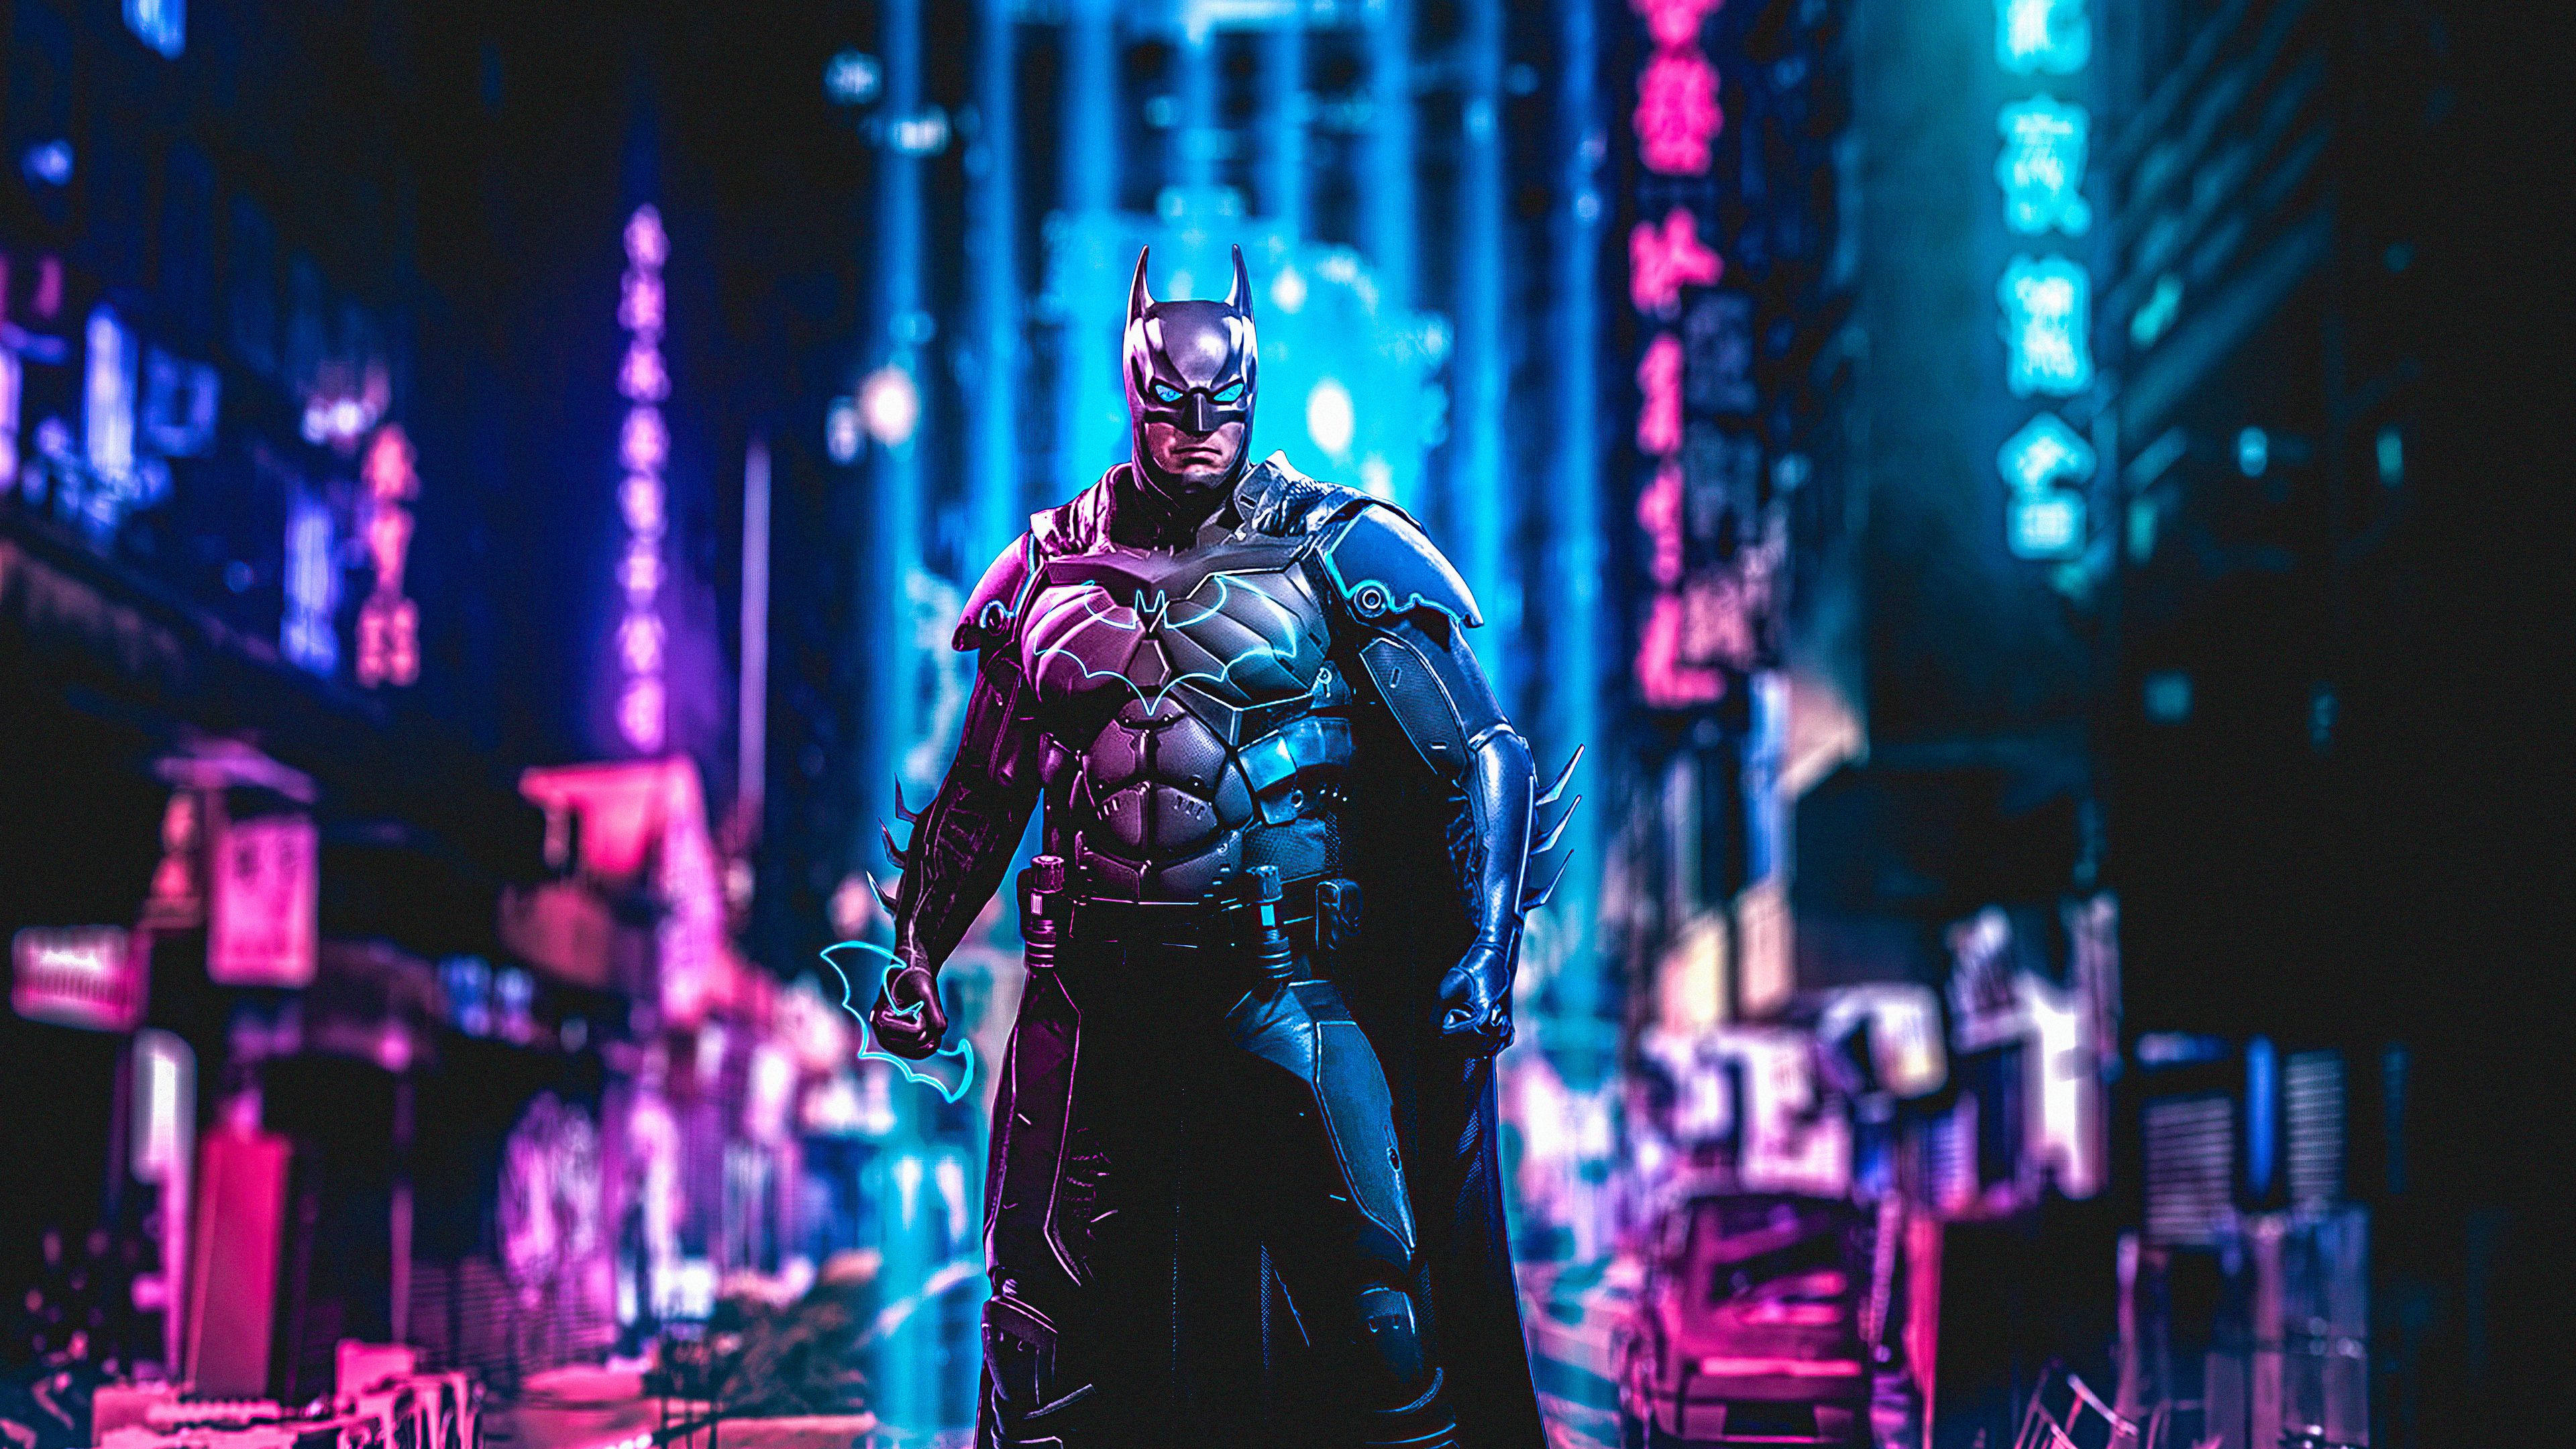 Batman Cyberpunk Art 4k, HD Superheroes, 4k Wallpaper, Image, Background, Photo and Picture